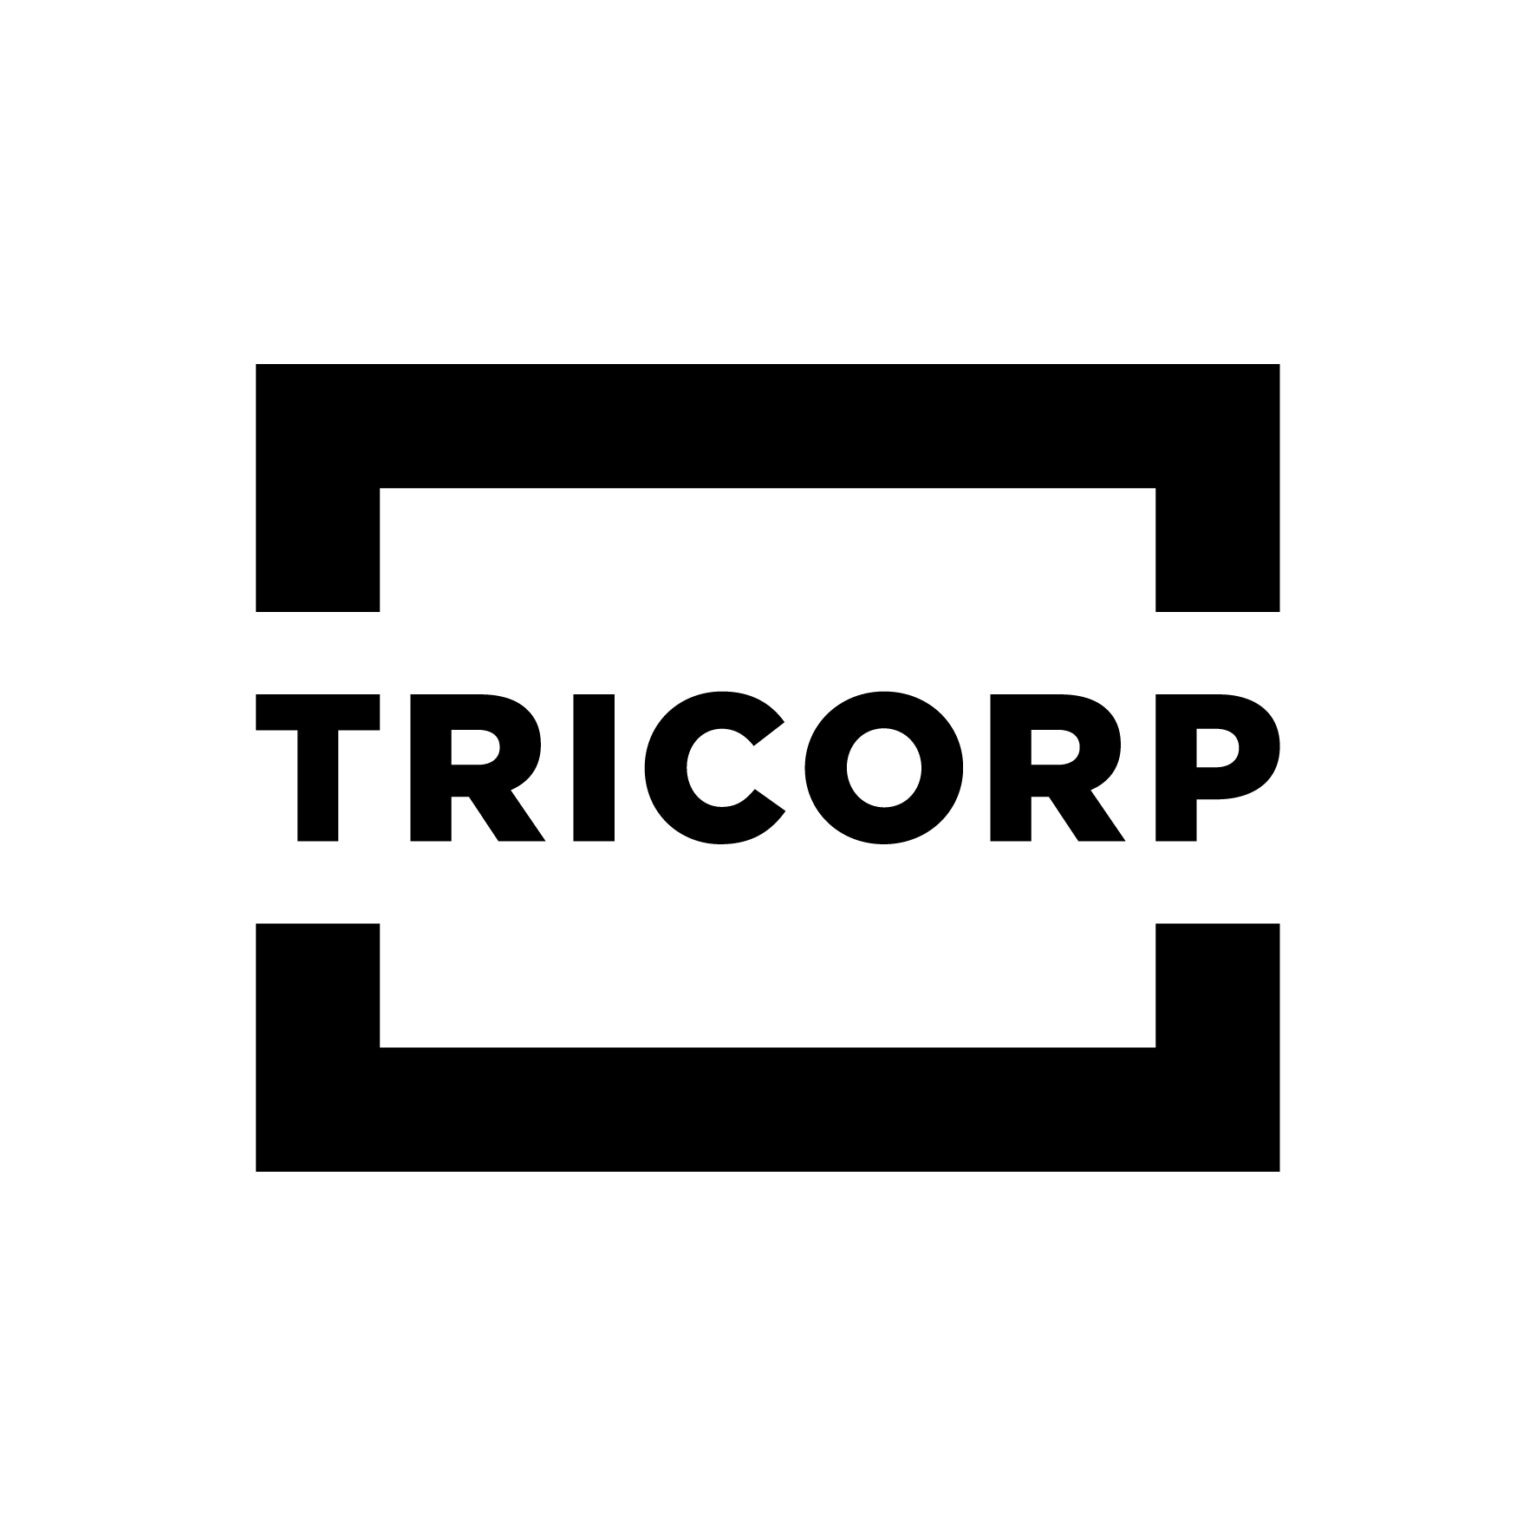 Tricorp Workwear